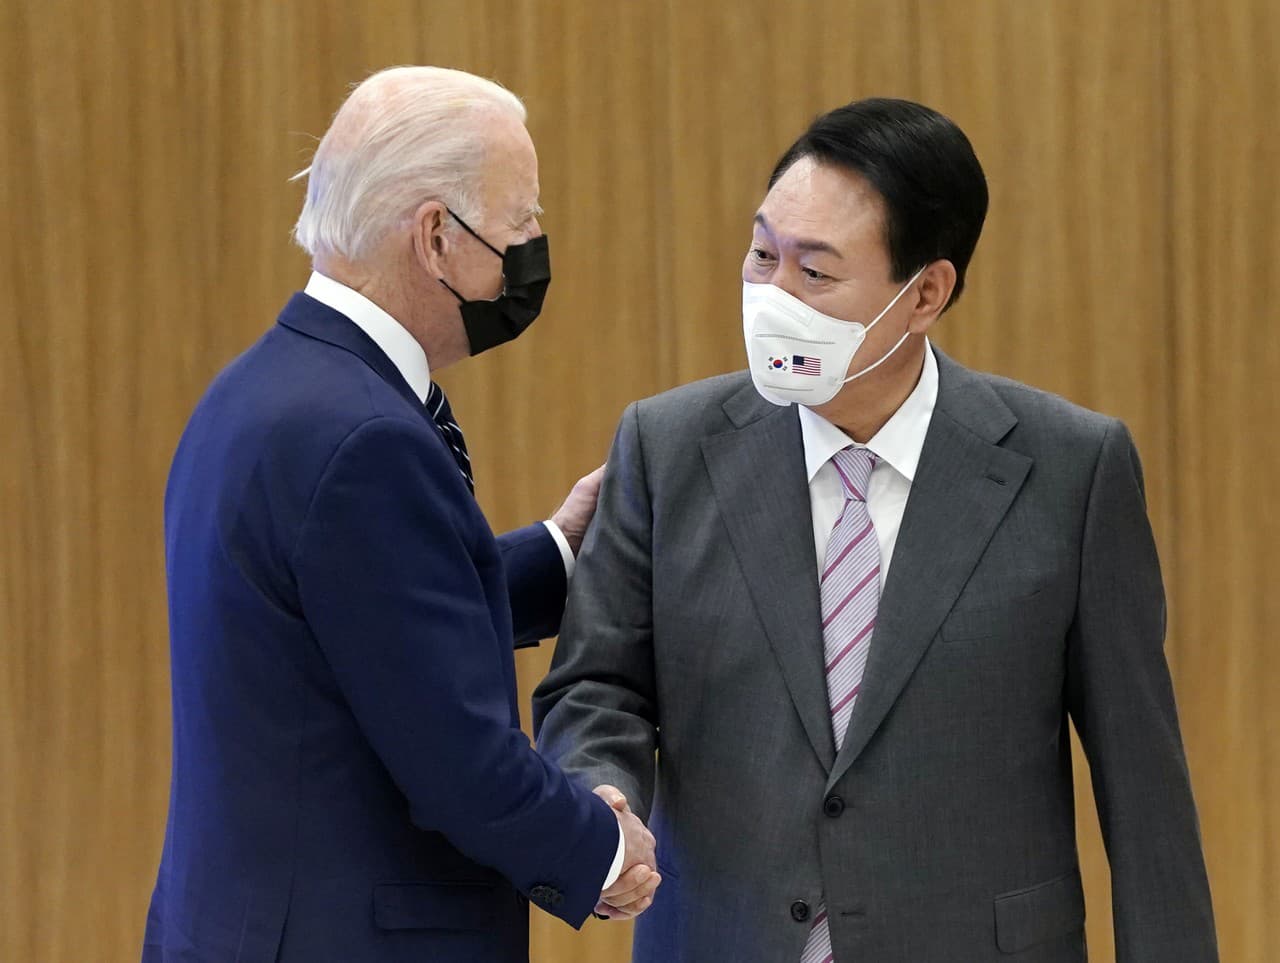 Joe Biden pricestoval do Južnej Kórey